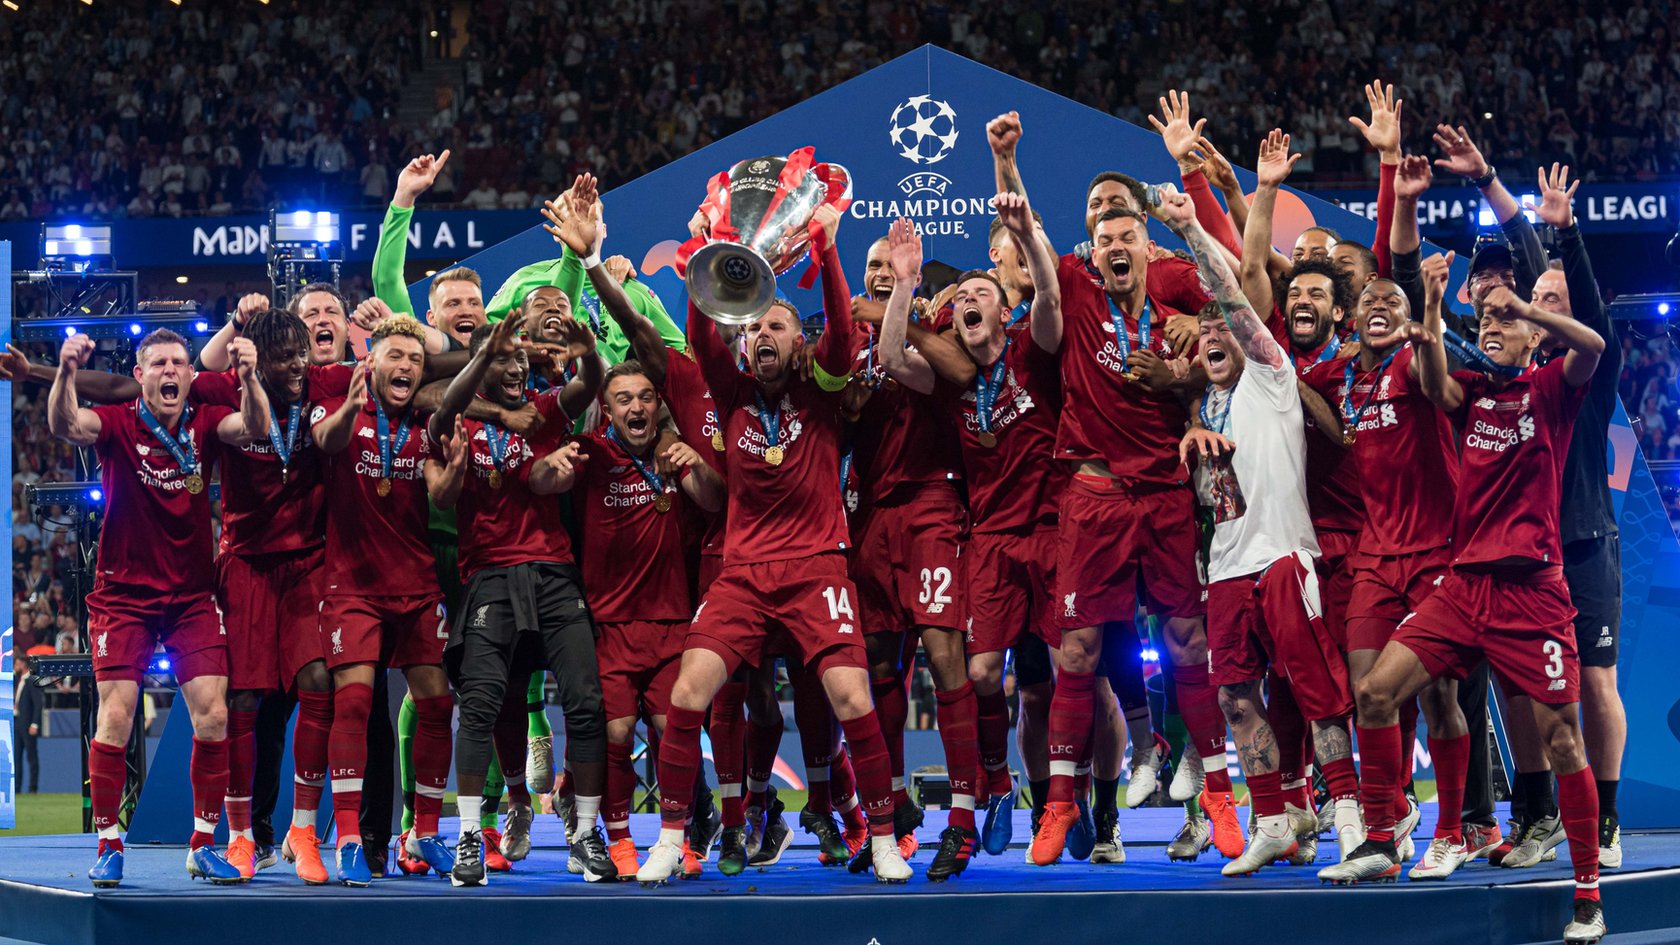 Follow Liverpool's Champions League victory parade - BBC News